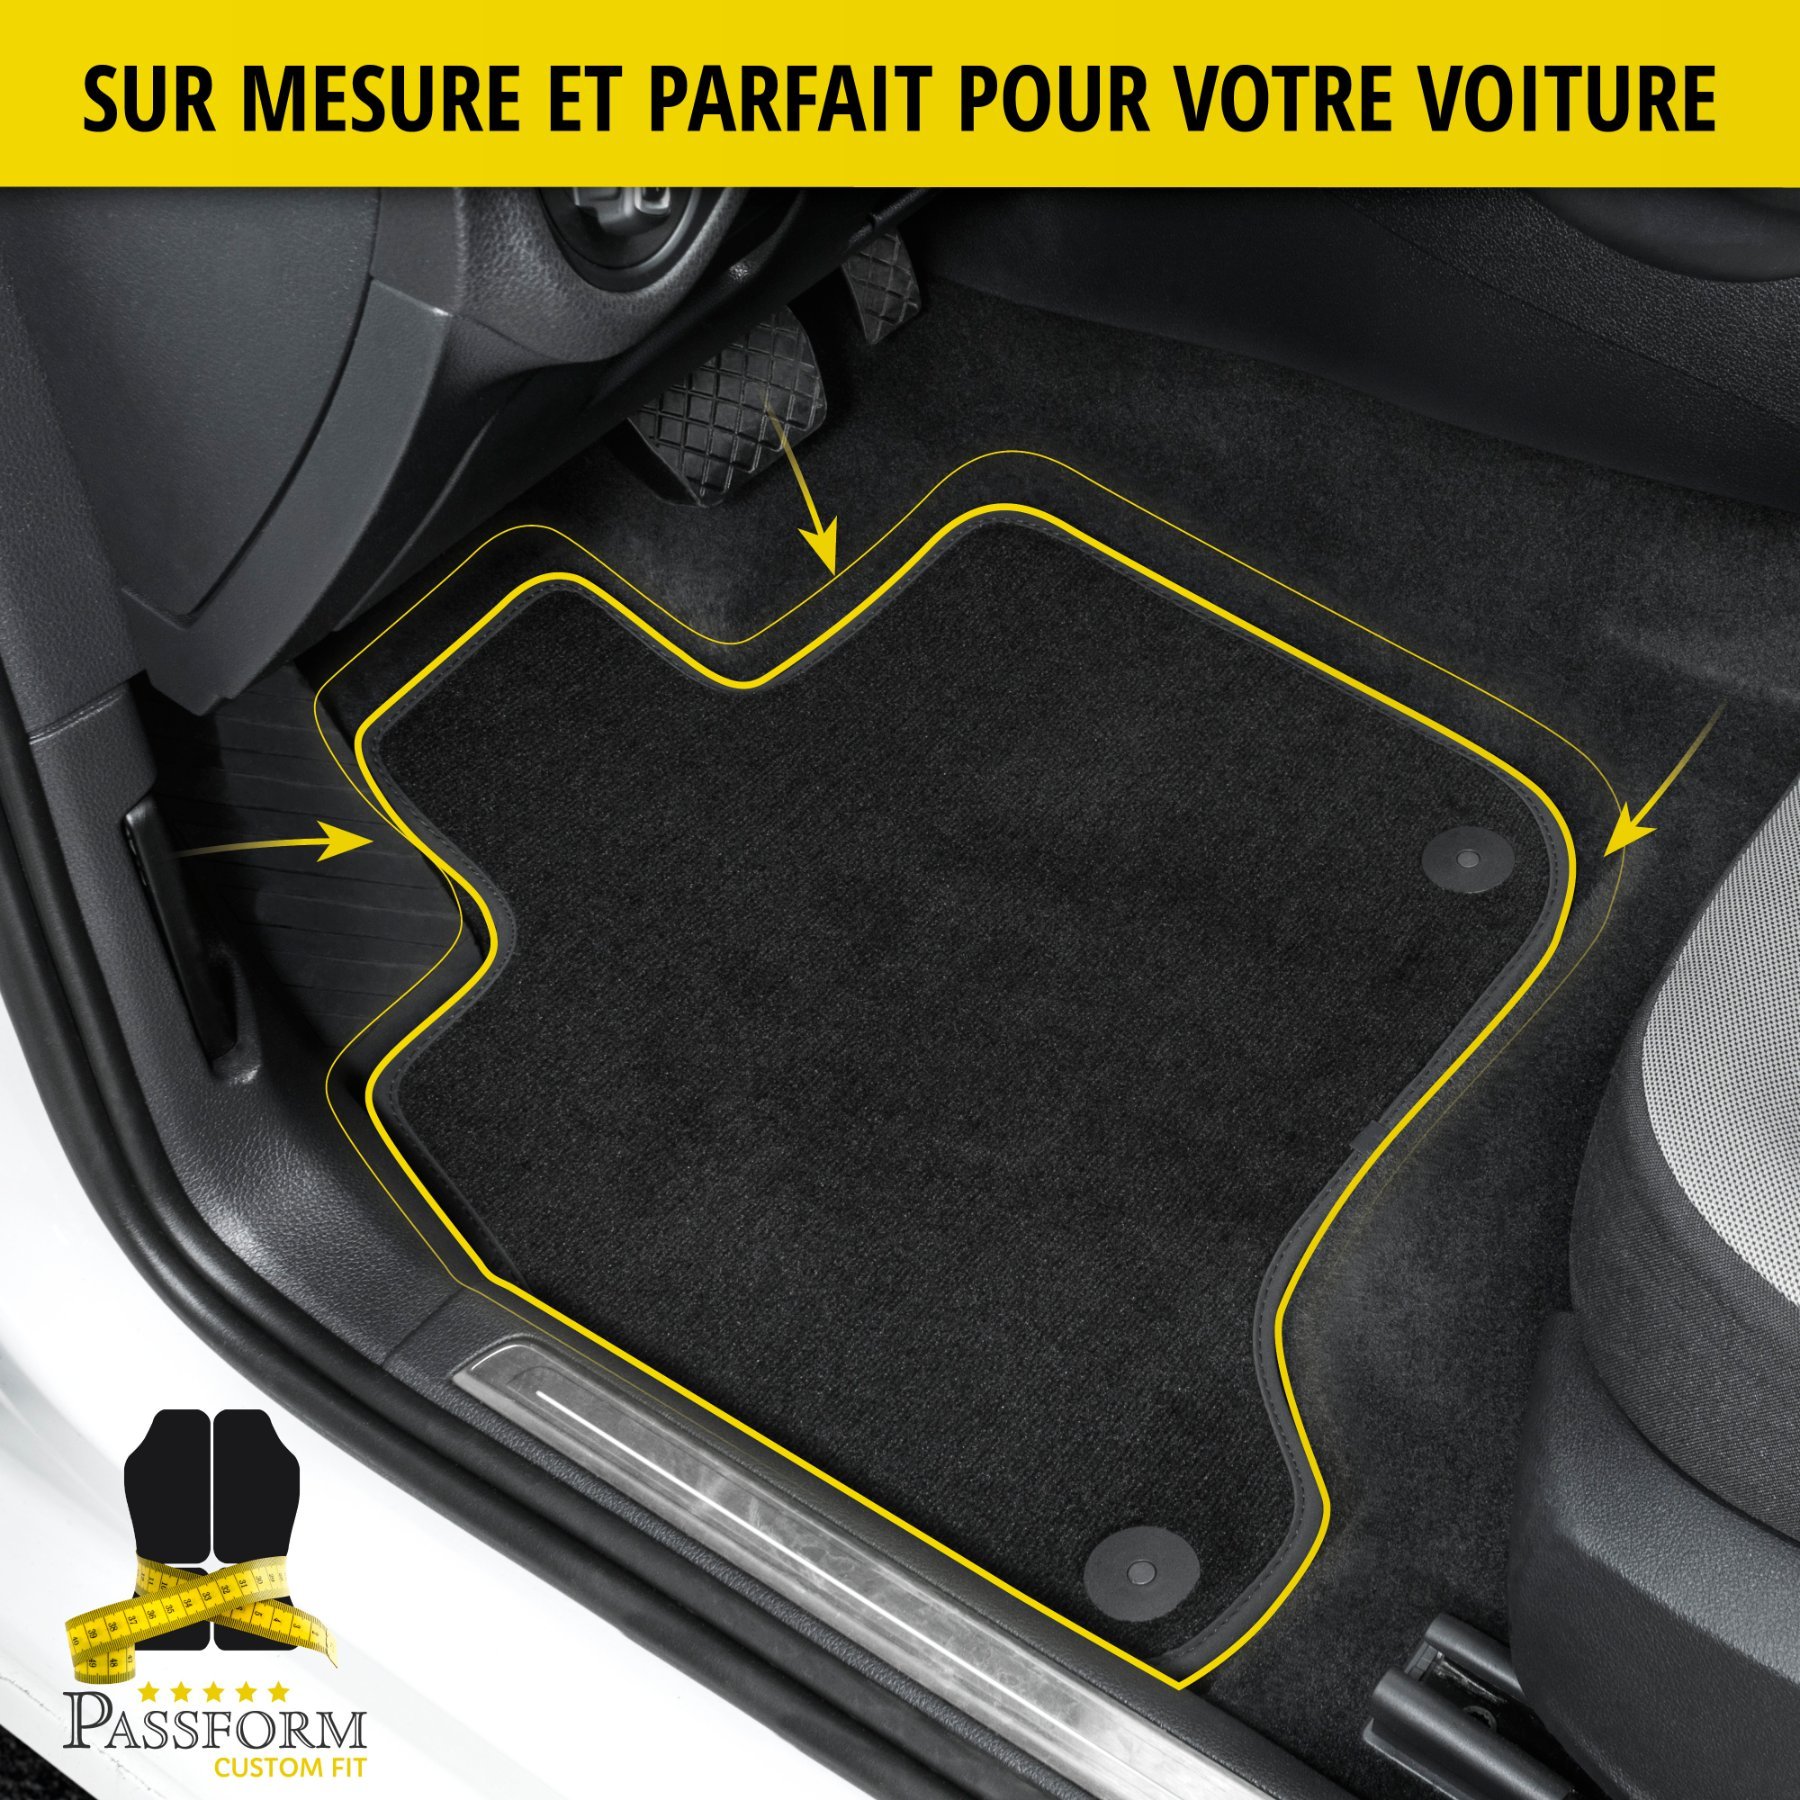 Premium Tapis de sol pour Ford Galaxy III 01/2015-auj., S-MAX 01/2015-auj.